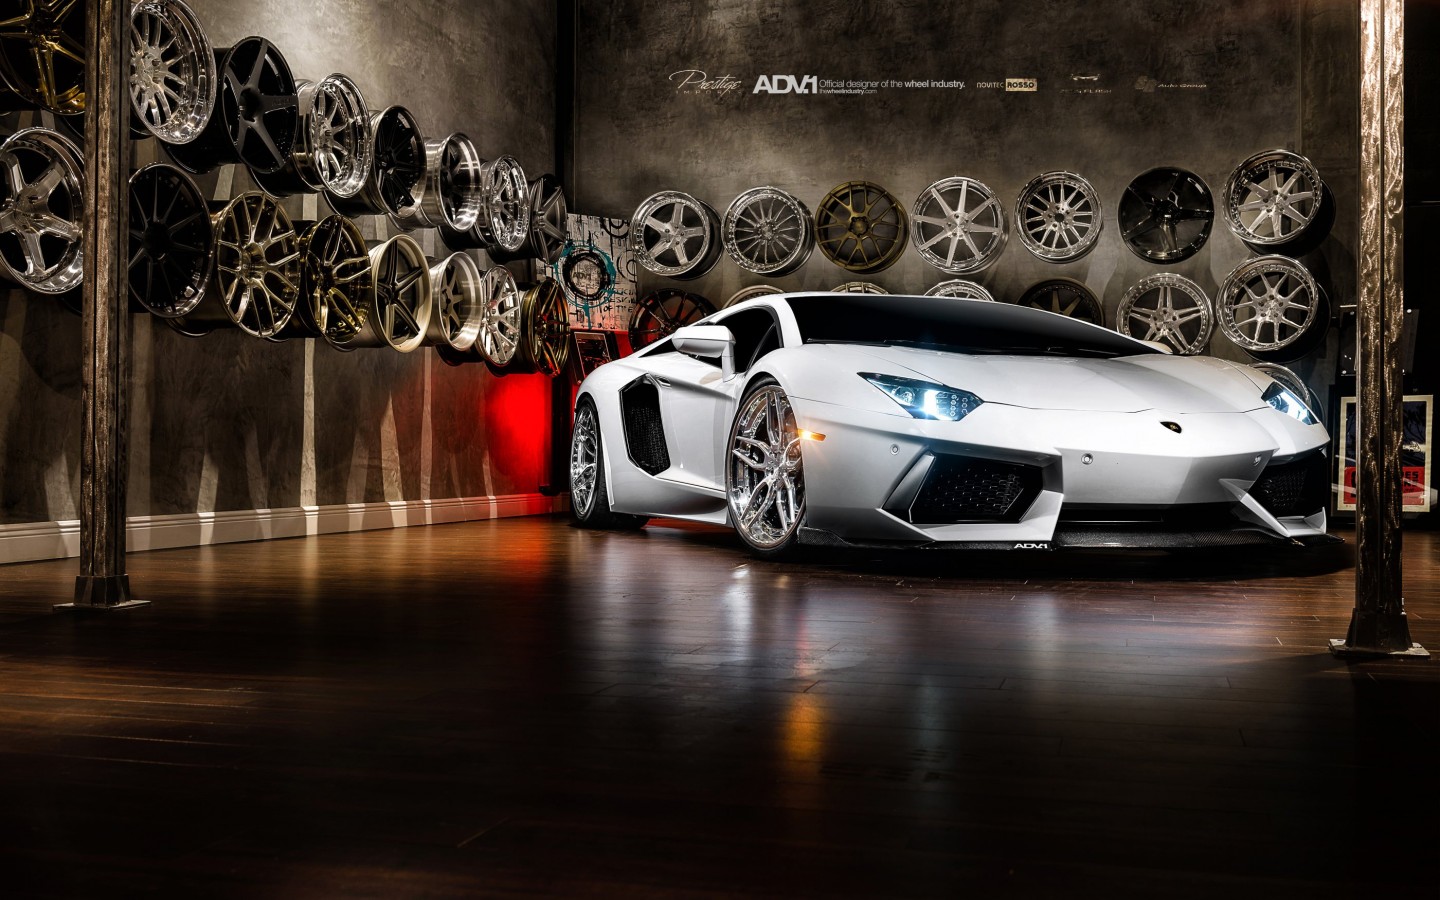 Lamborghini Aventador On ADV.1 Wheels Wallpaper for Desktop 1440x900